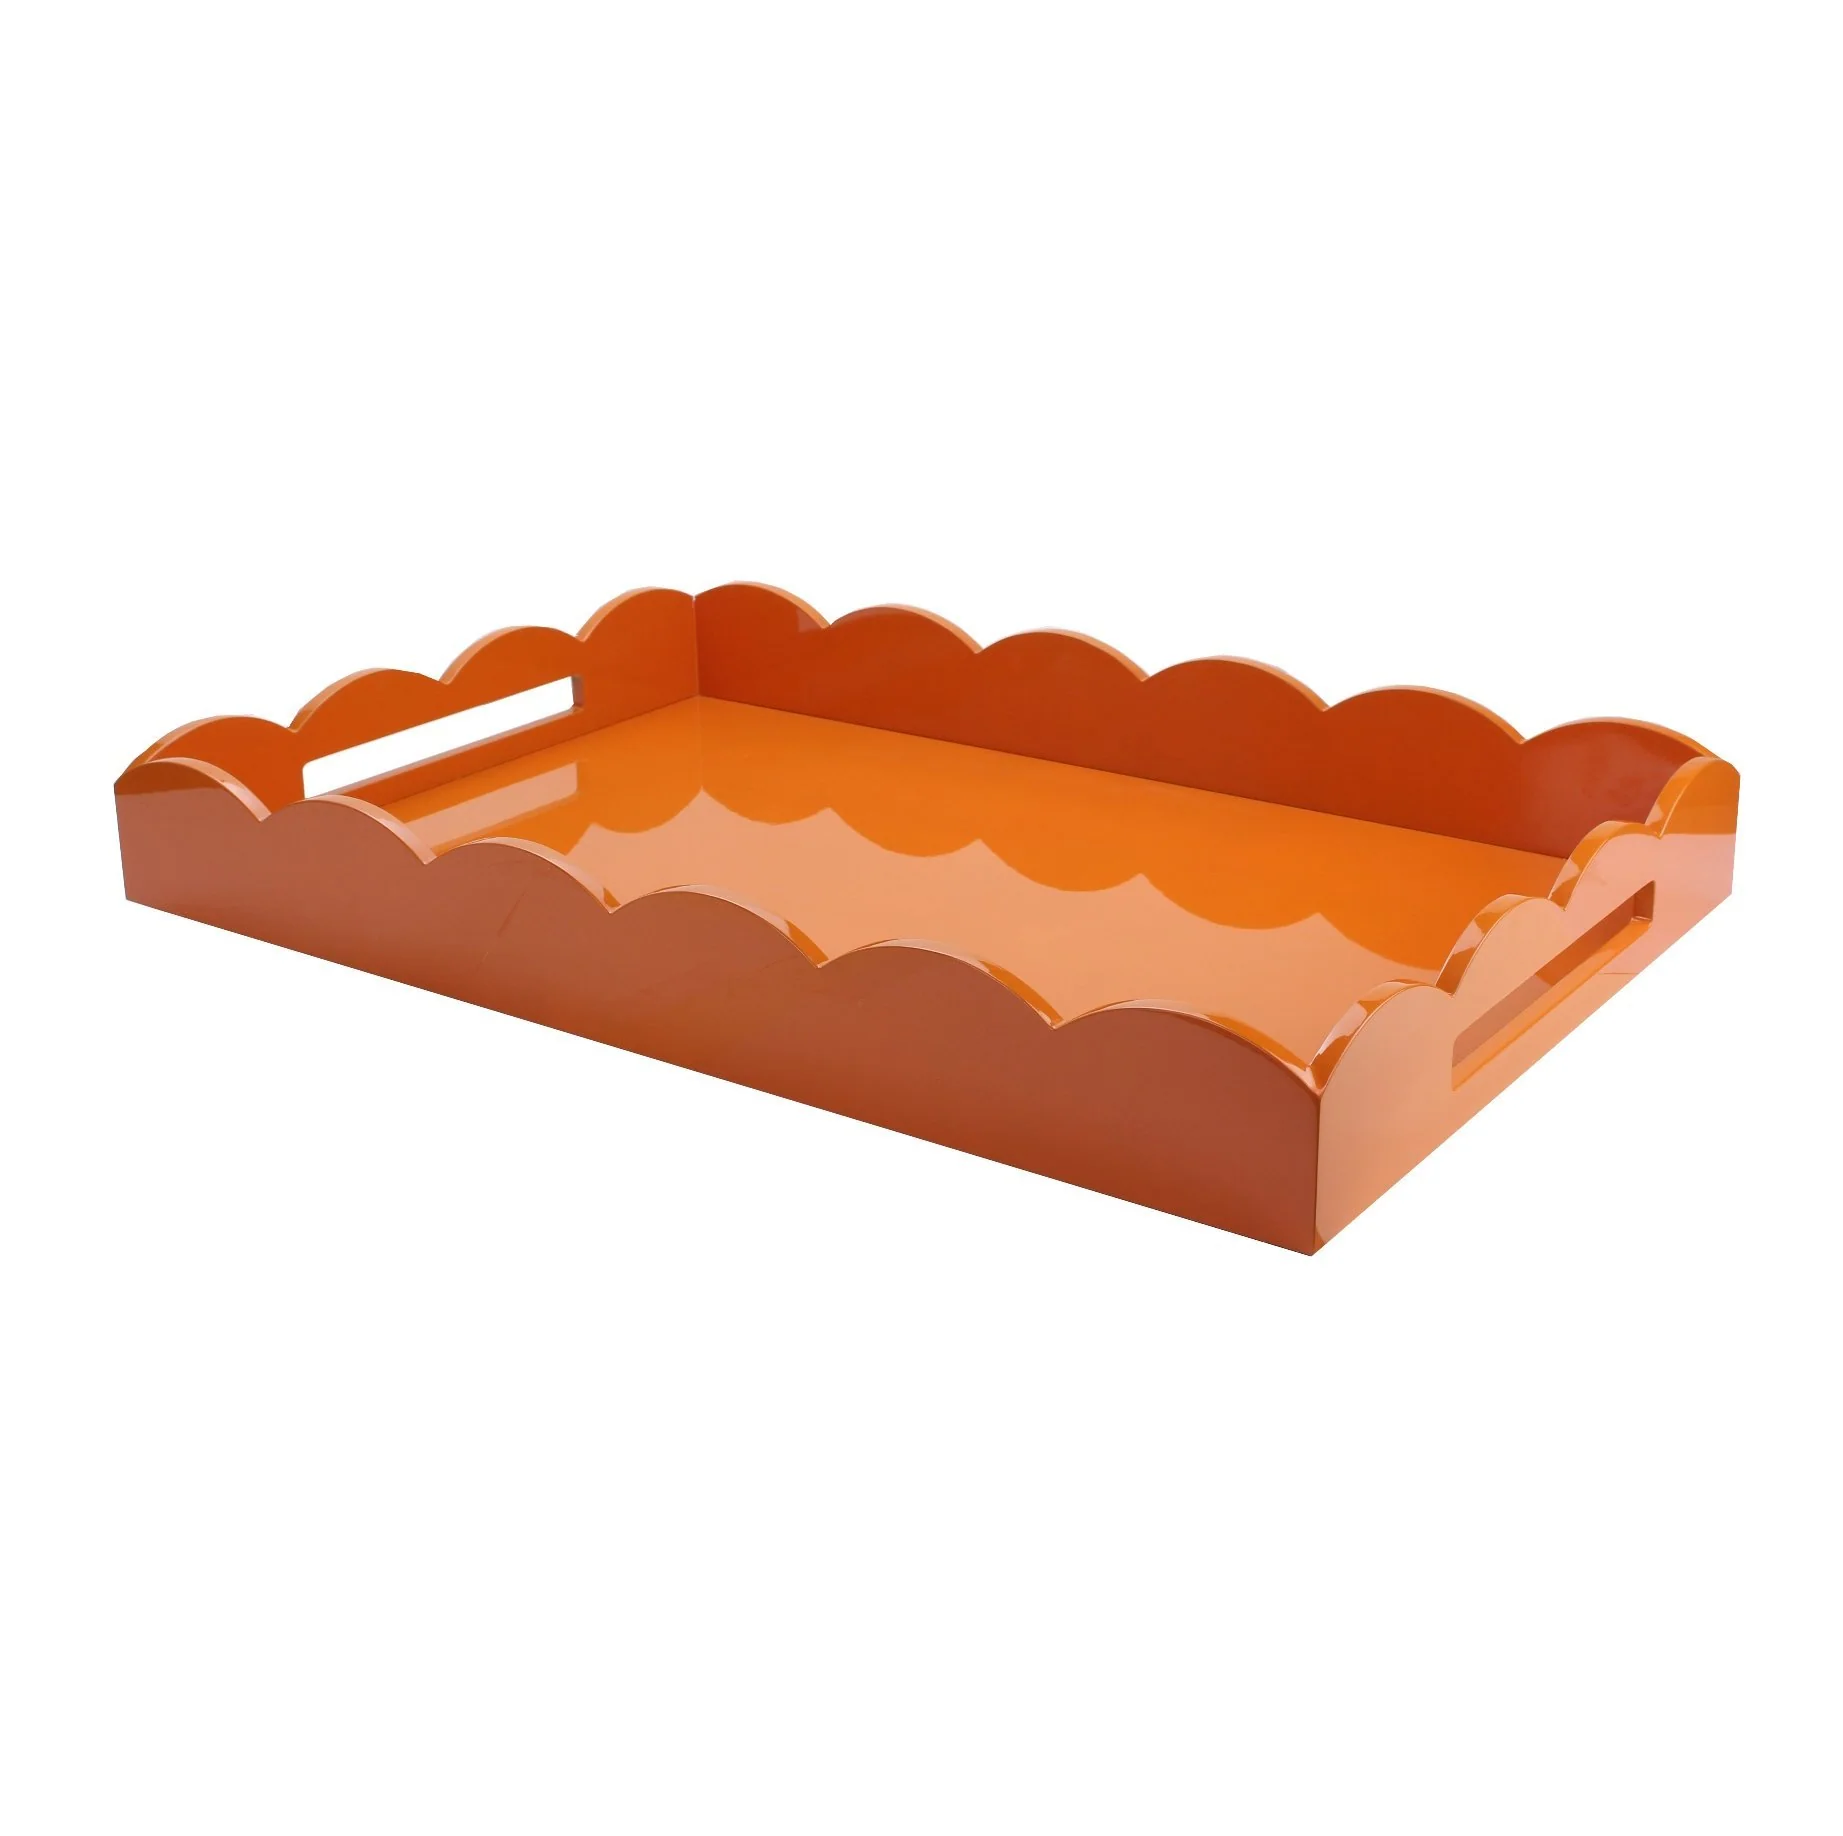 addison-ross-orange-large-lacquered-scallop-ottoman-tray